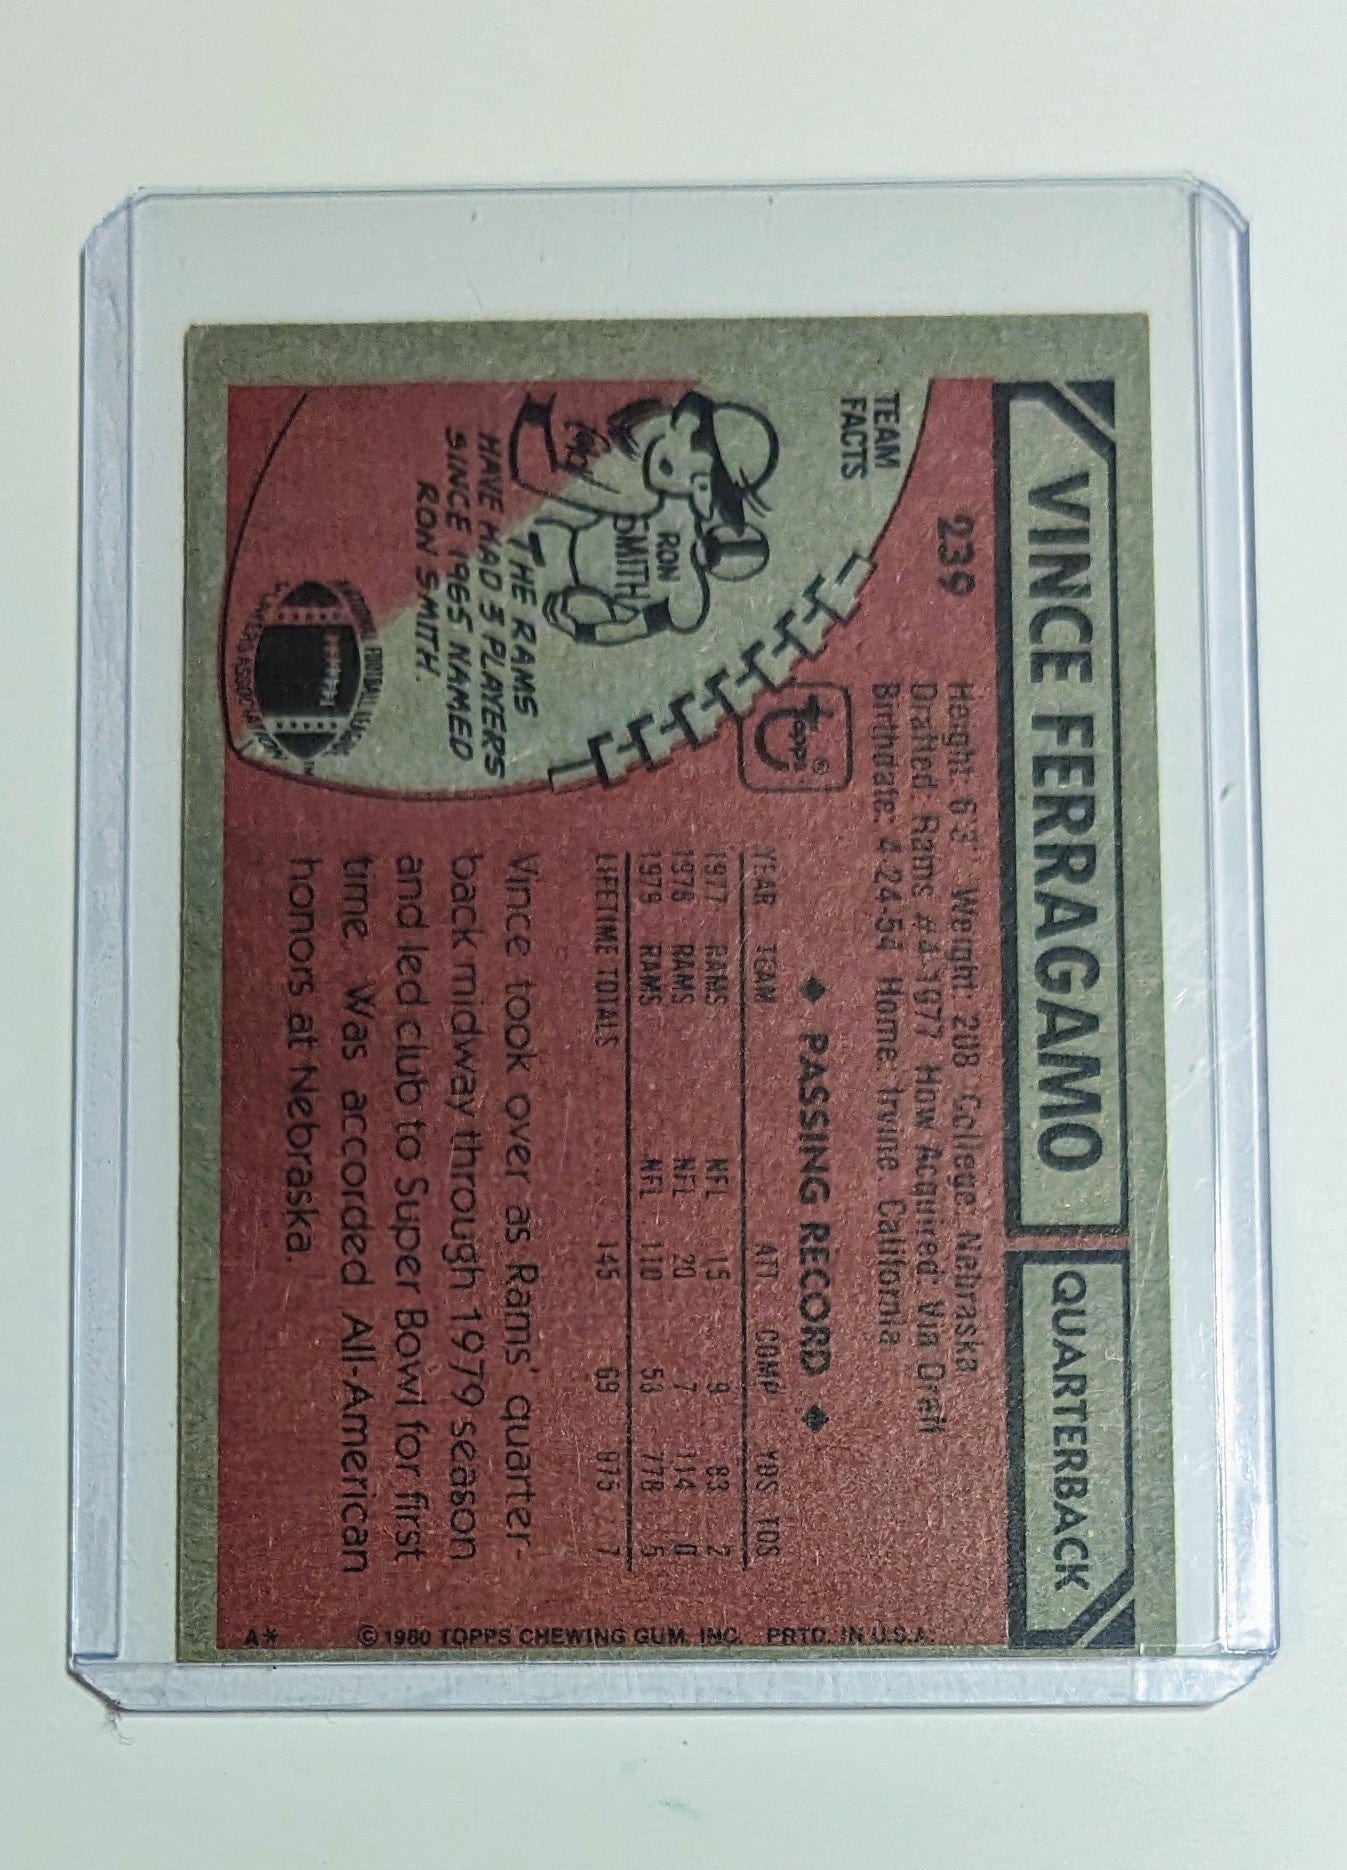 FIINR Football Card 1980 Topps Vince Ferragamo Football Card #239 - Mint Condition